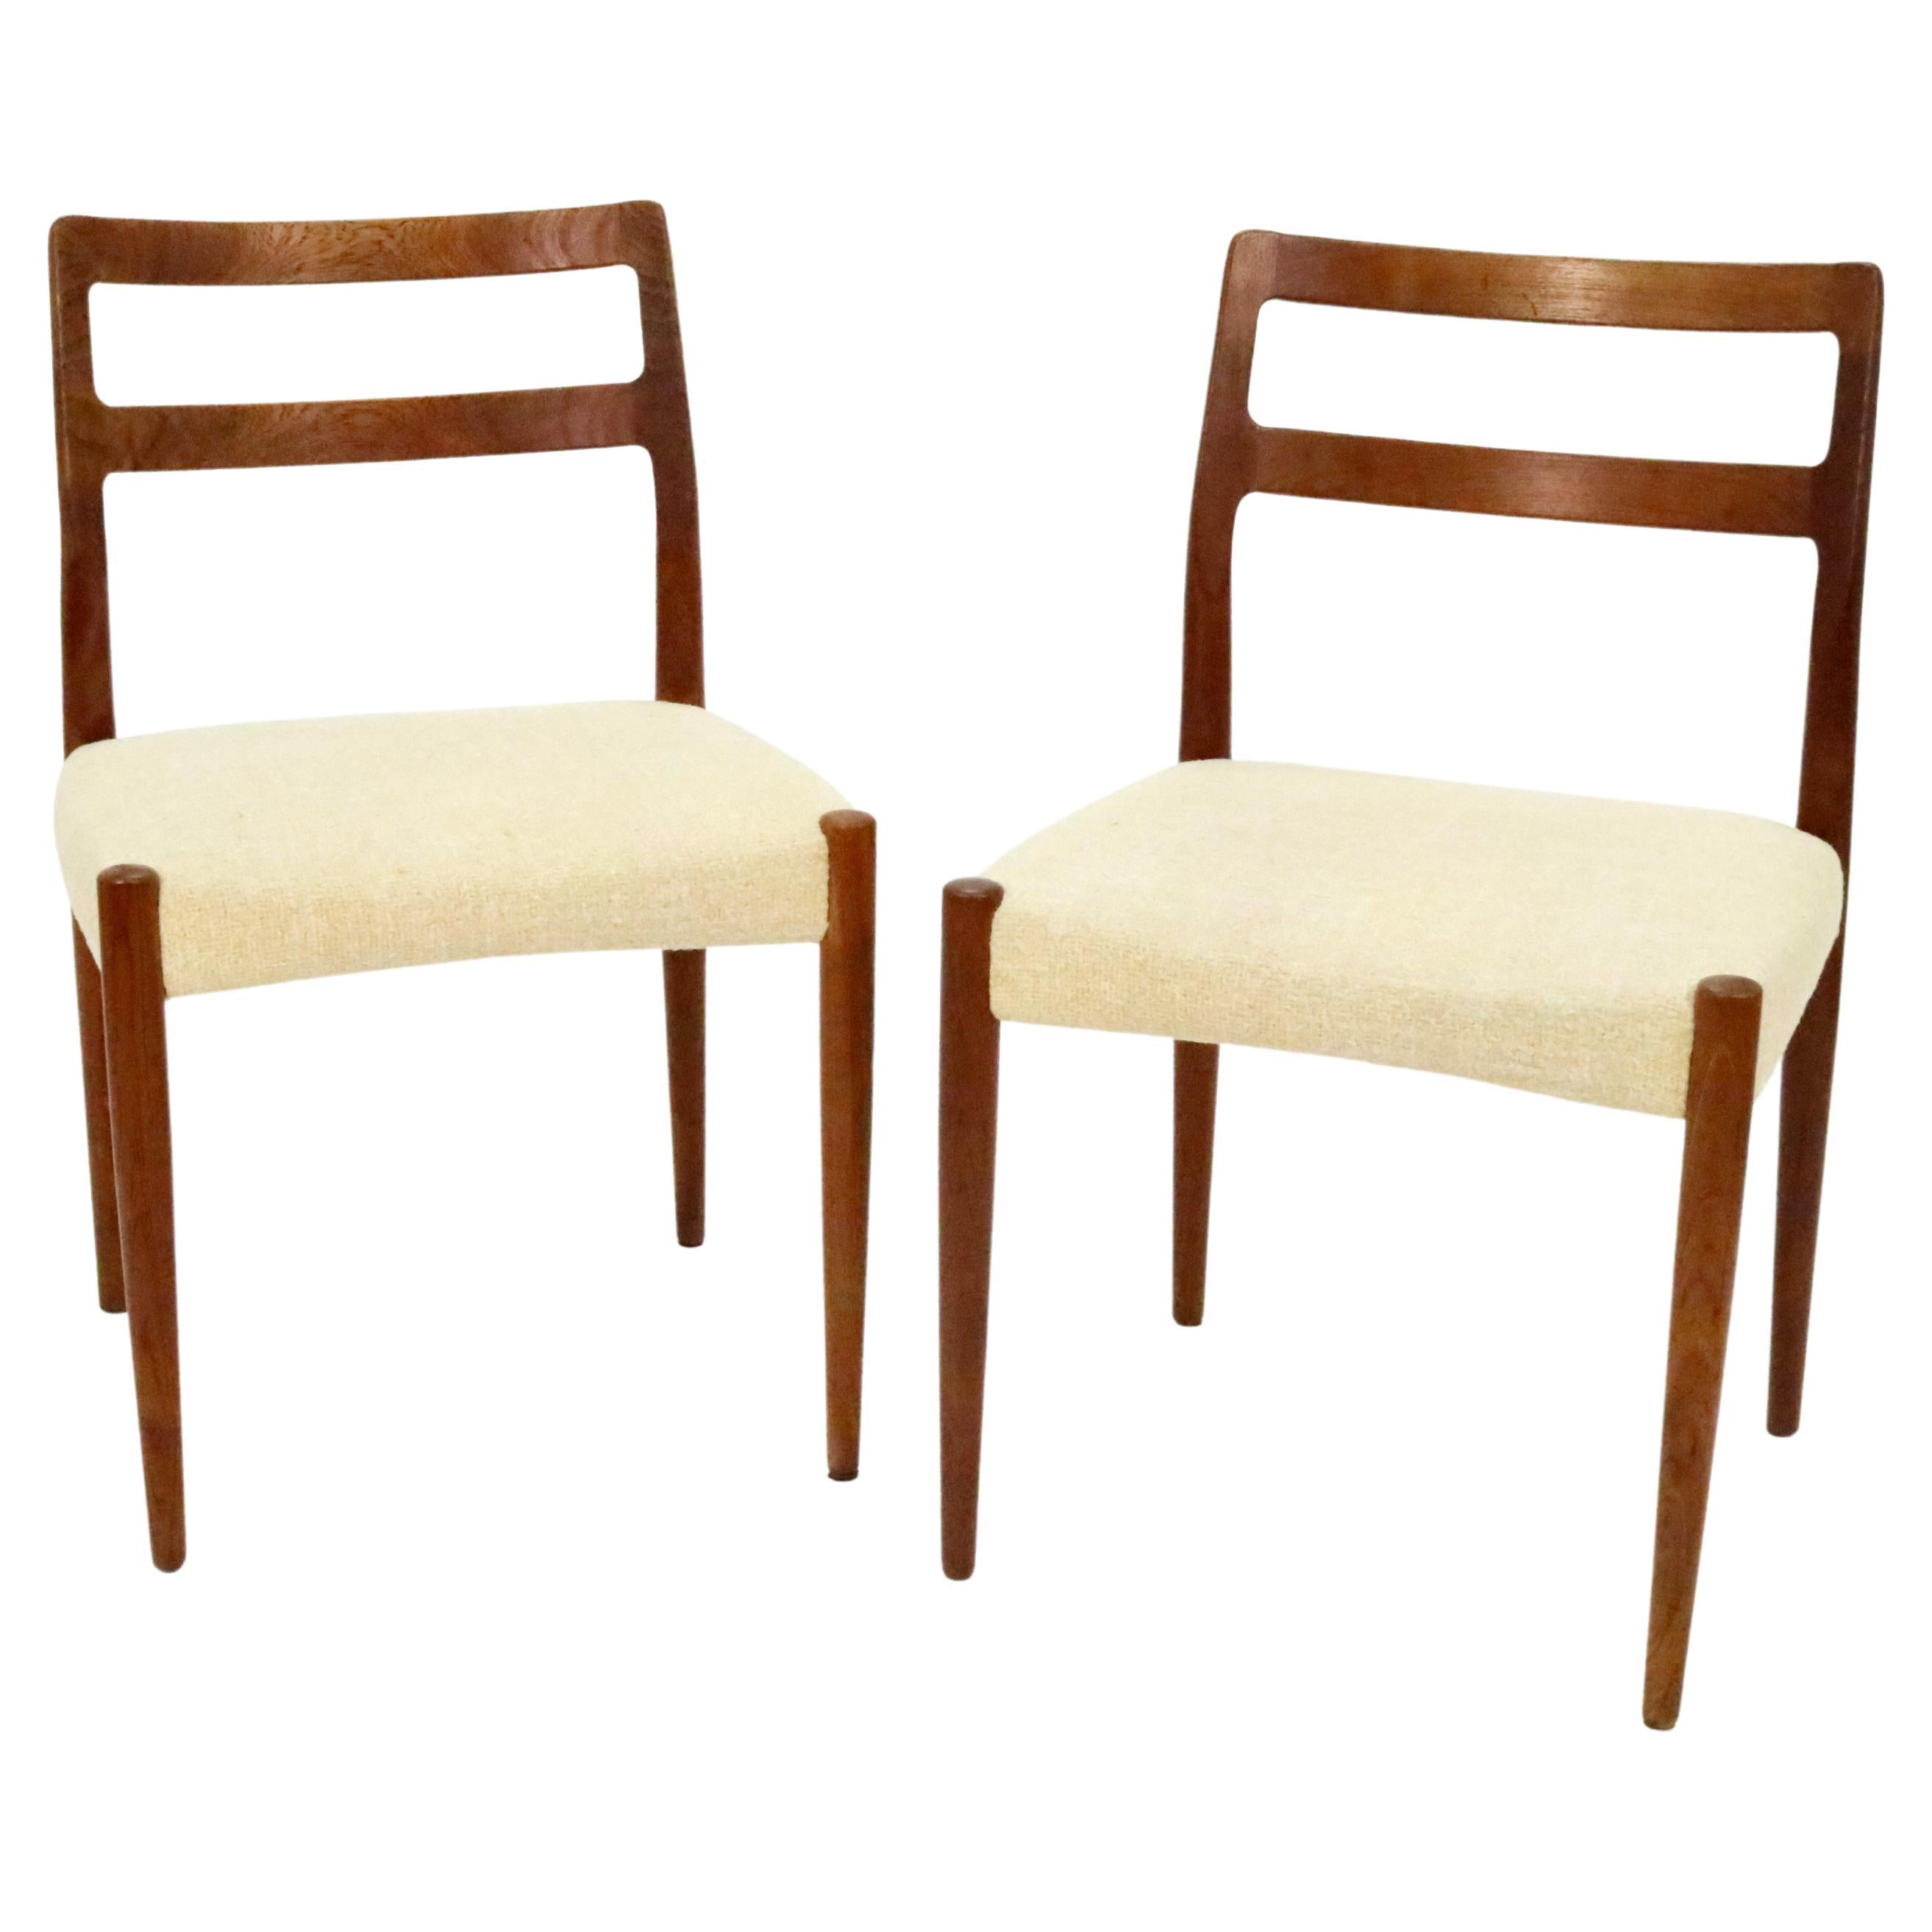 'Anne' Teak Dining Chairs by Johannes Andersen for Uldum Mobelfabrik